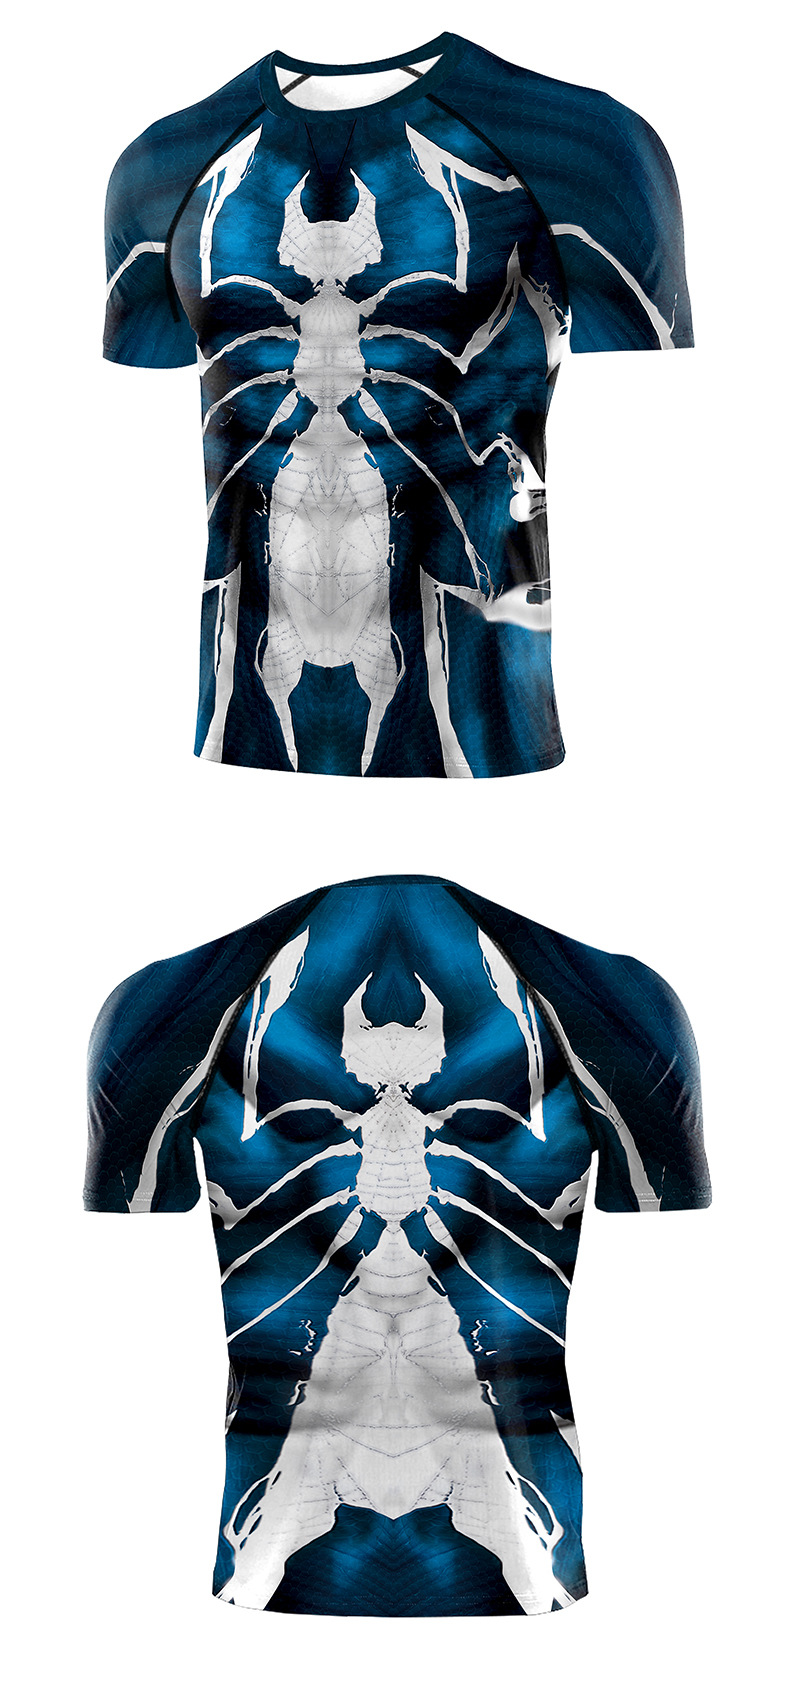 Blue Venom Spider Man print Tee Shirt - Front And Back